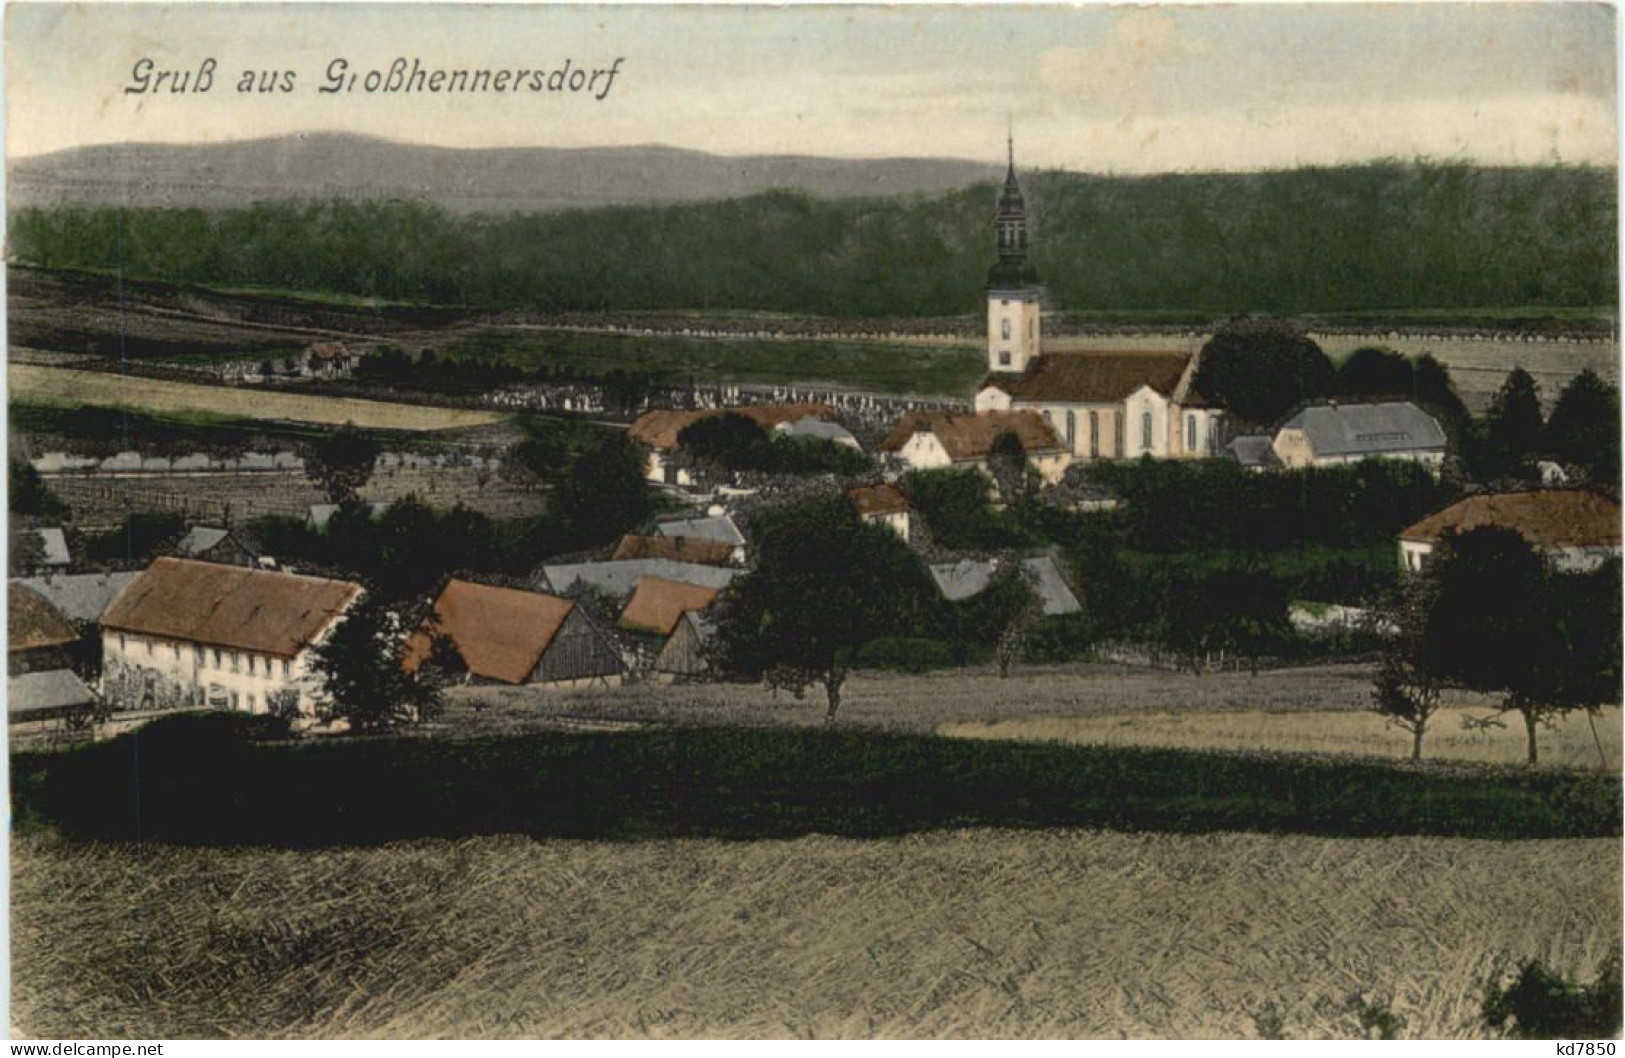 Gruß Aus Großhennersdorf - Herrnhut - Herrnhut